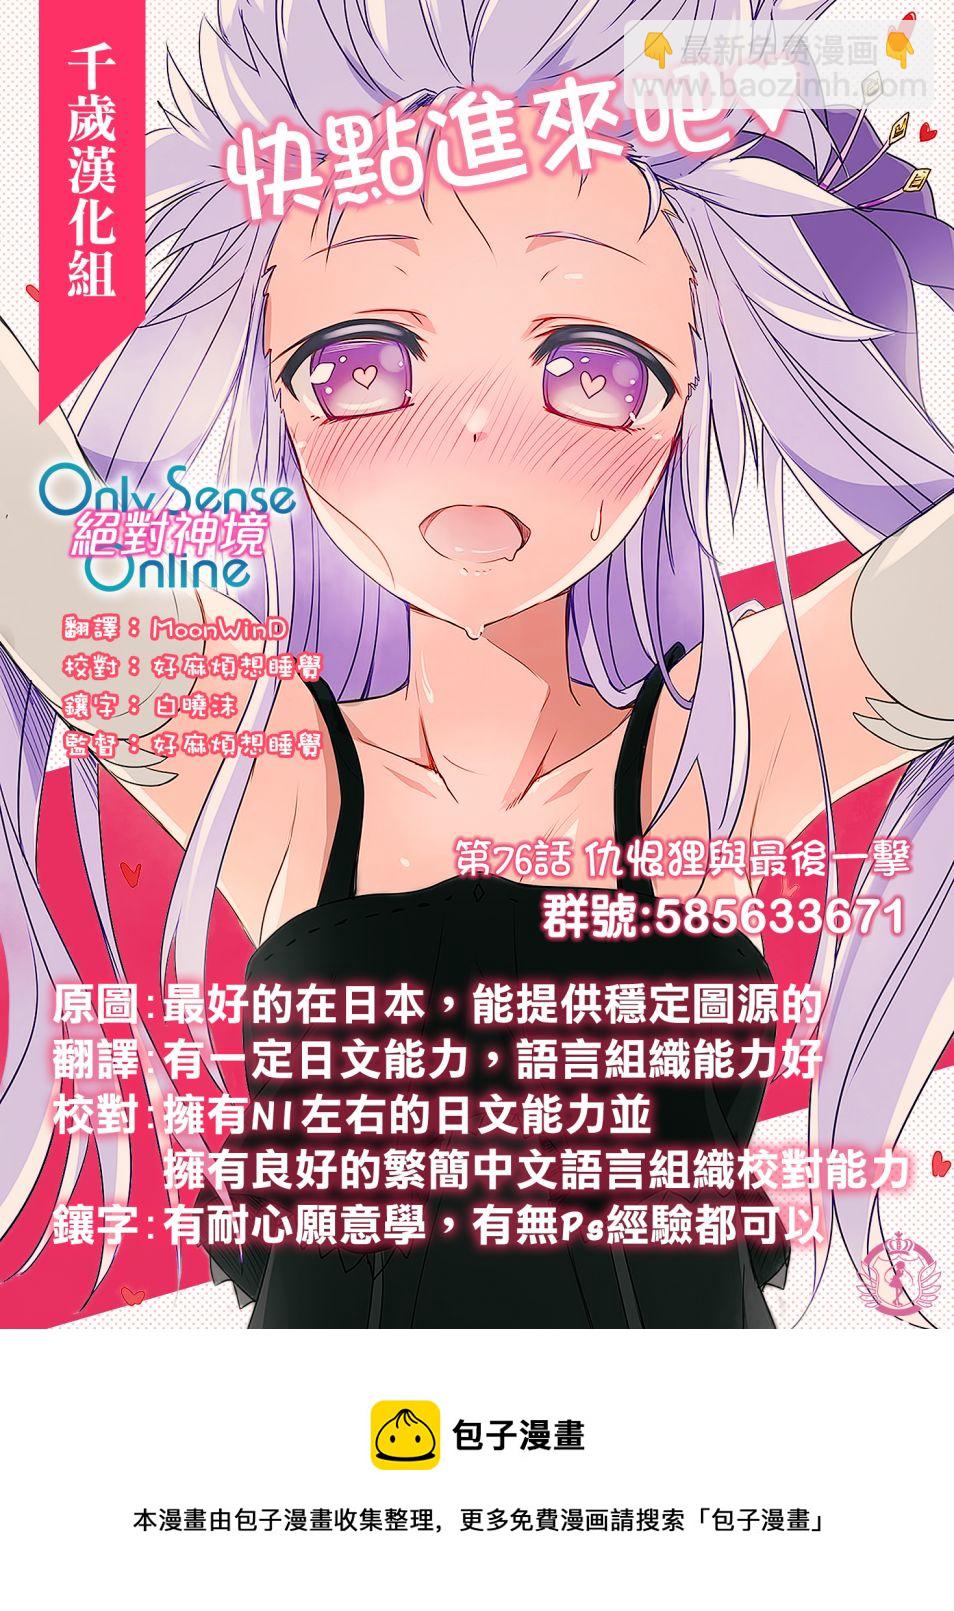 Only Sense Online - 第76話 - 5